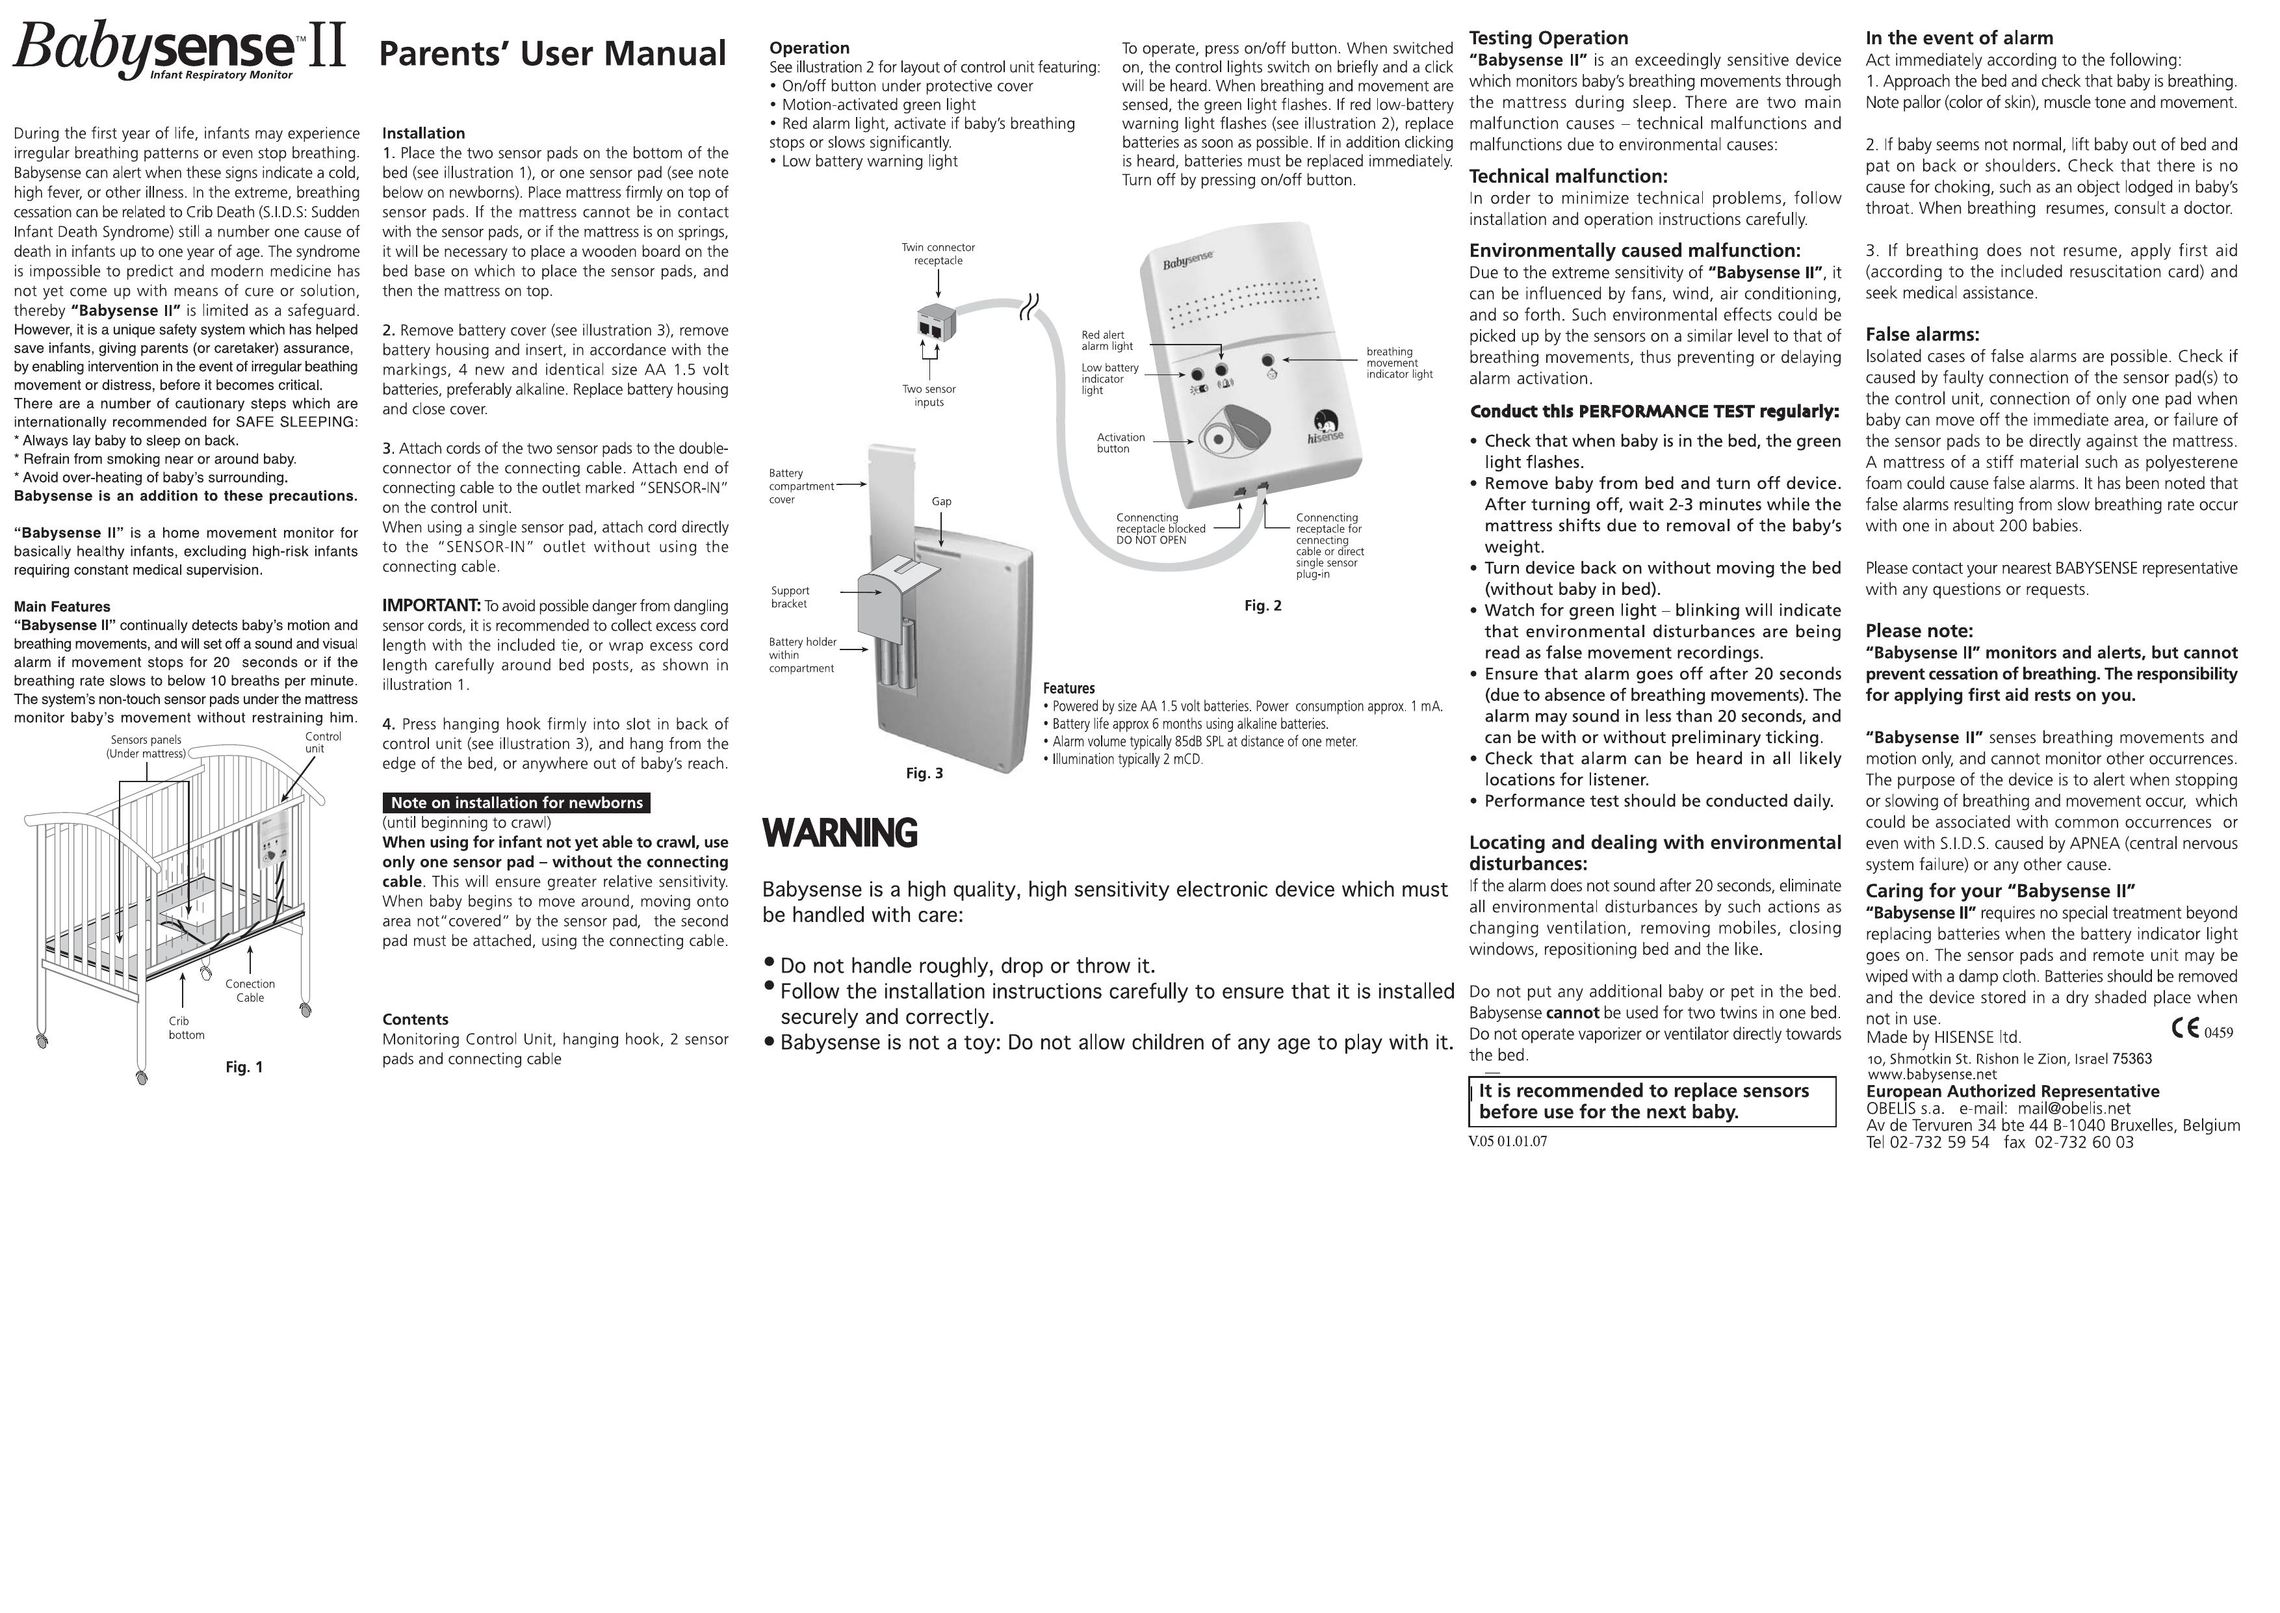 Hisense Babysense2 Baby Monitor User Manual